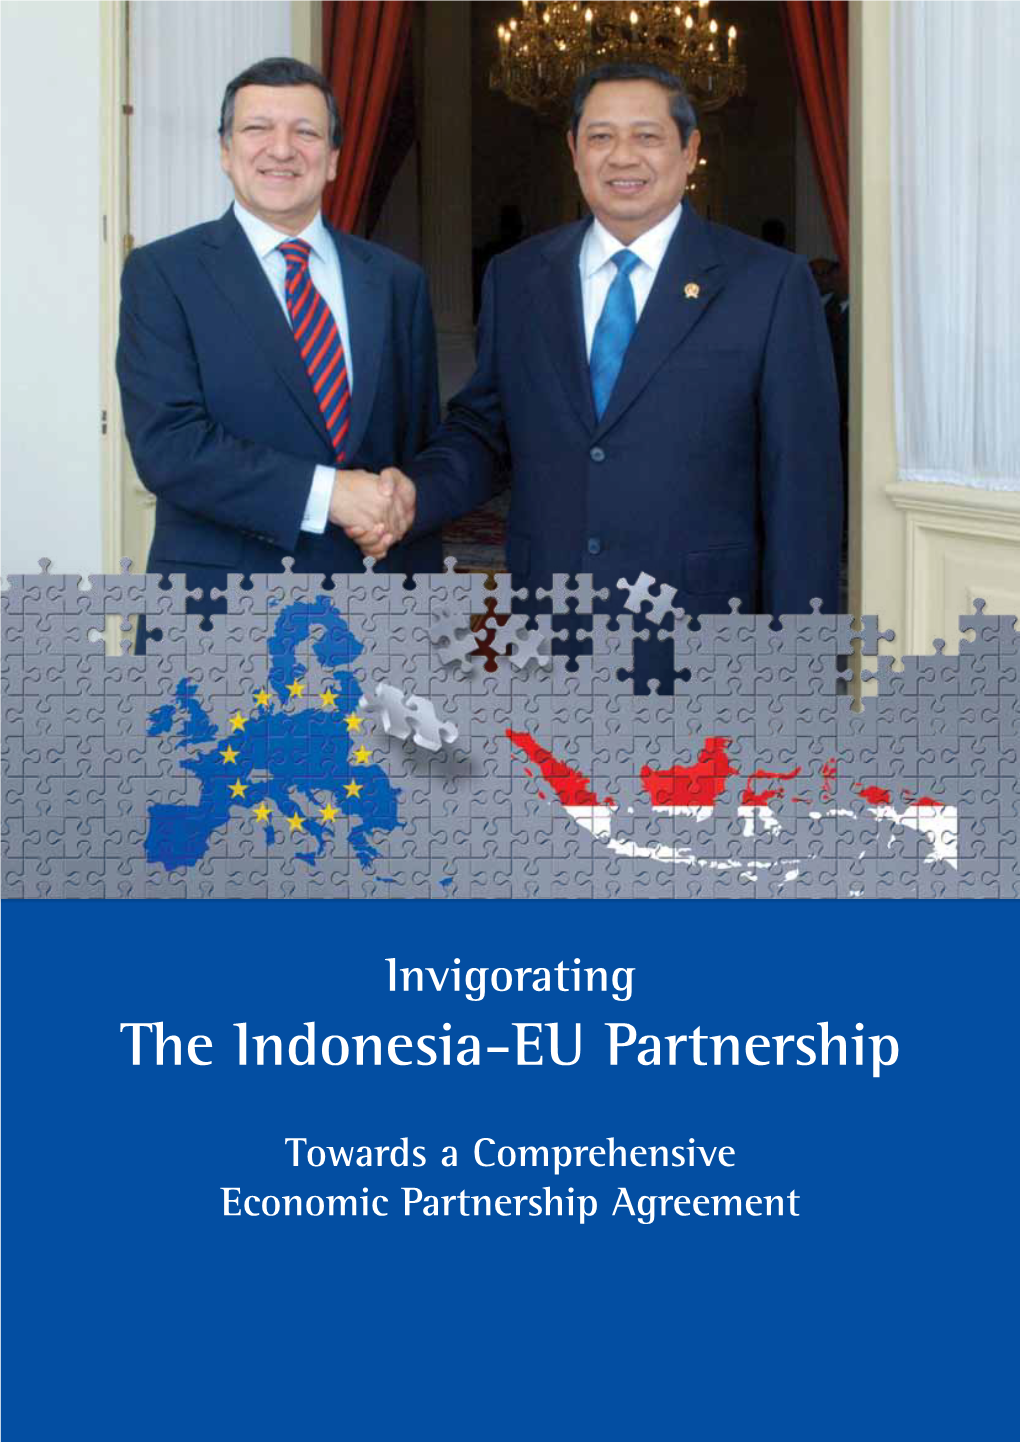 The Indonesia-EU Partnership